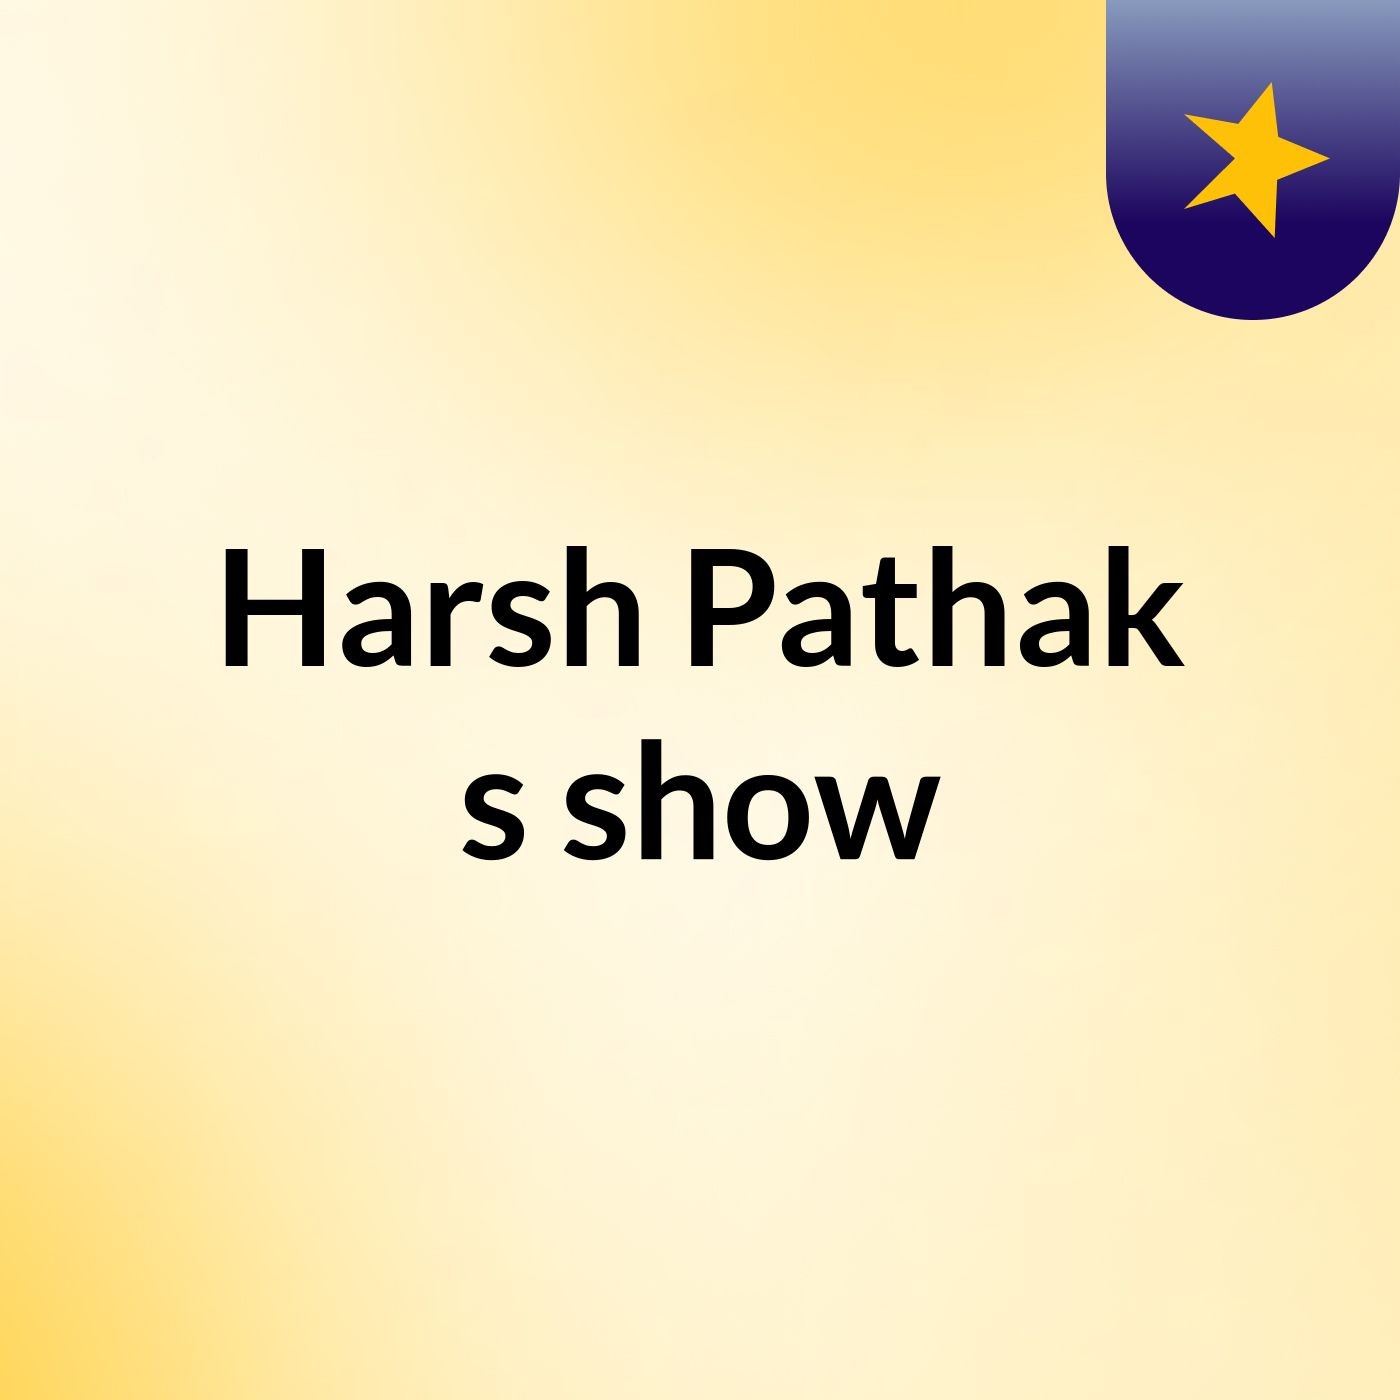 Harsh Pathak's show